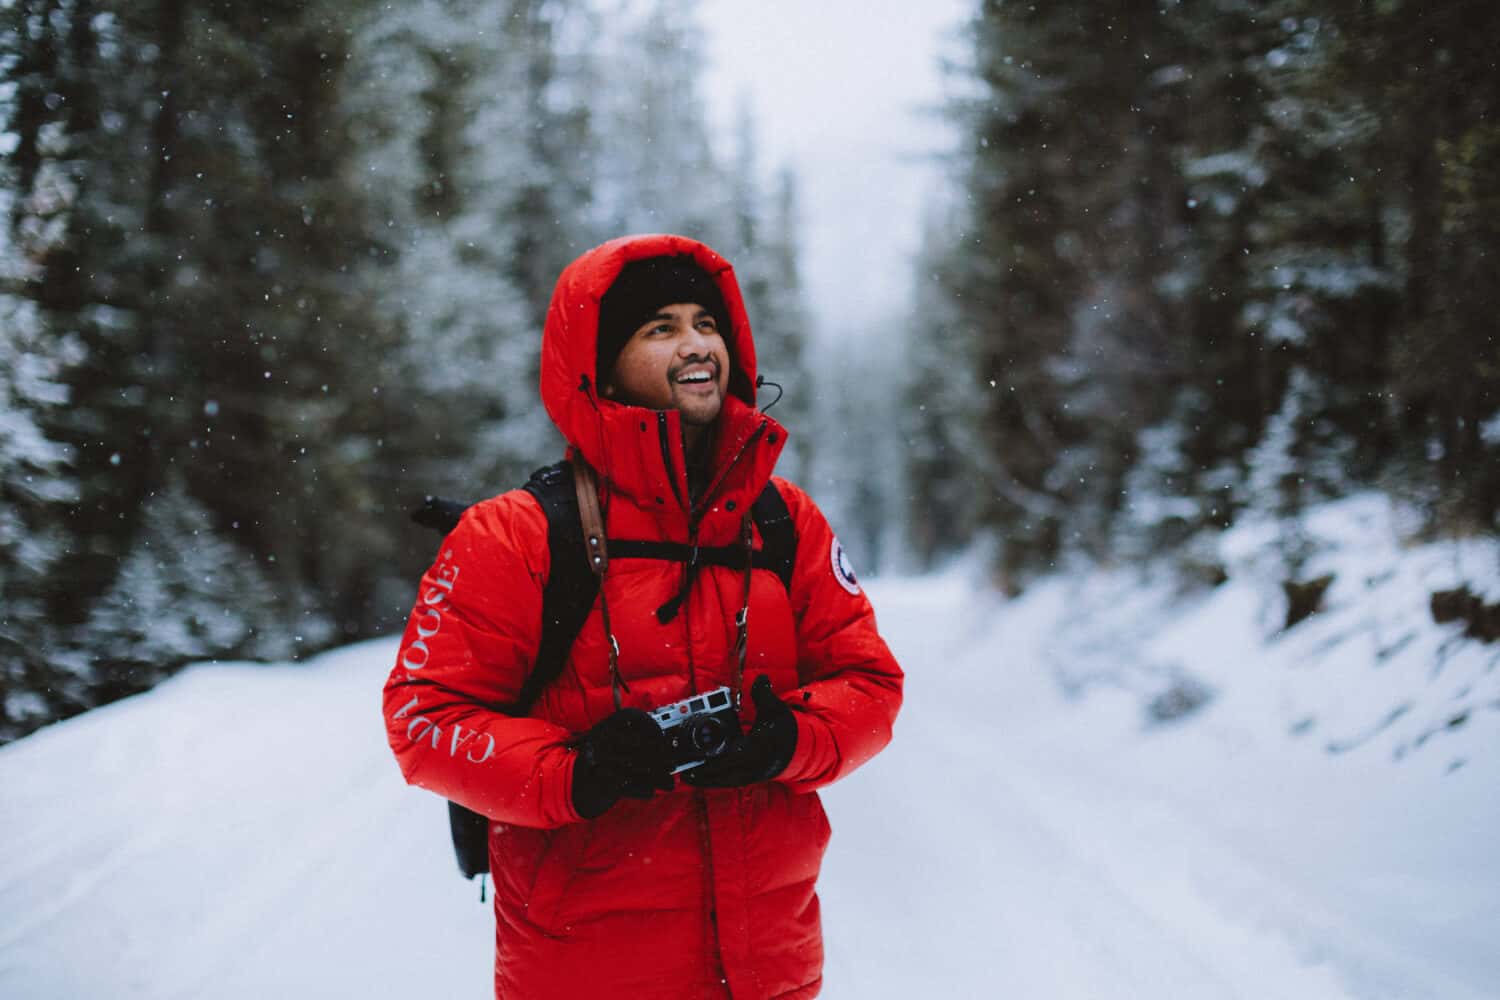 Berty Mandagie taking photos in the snow - TheMandagies.com